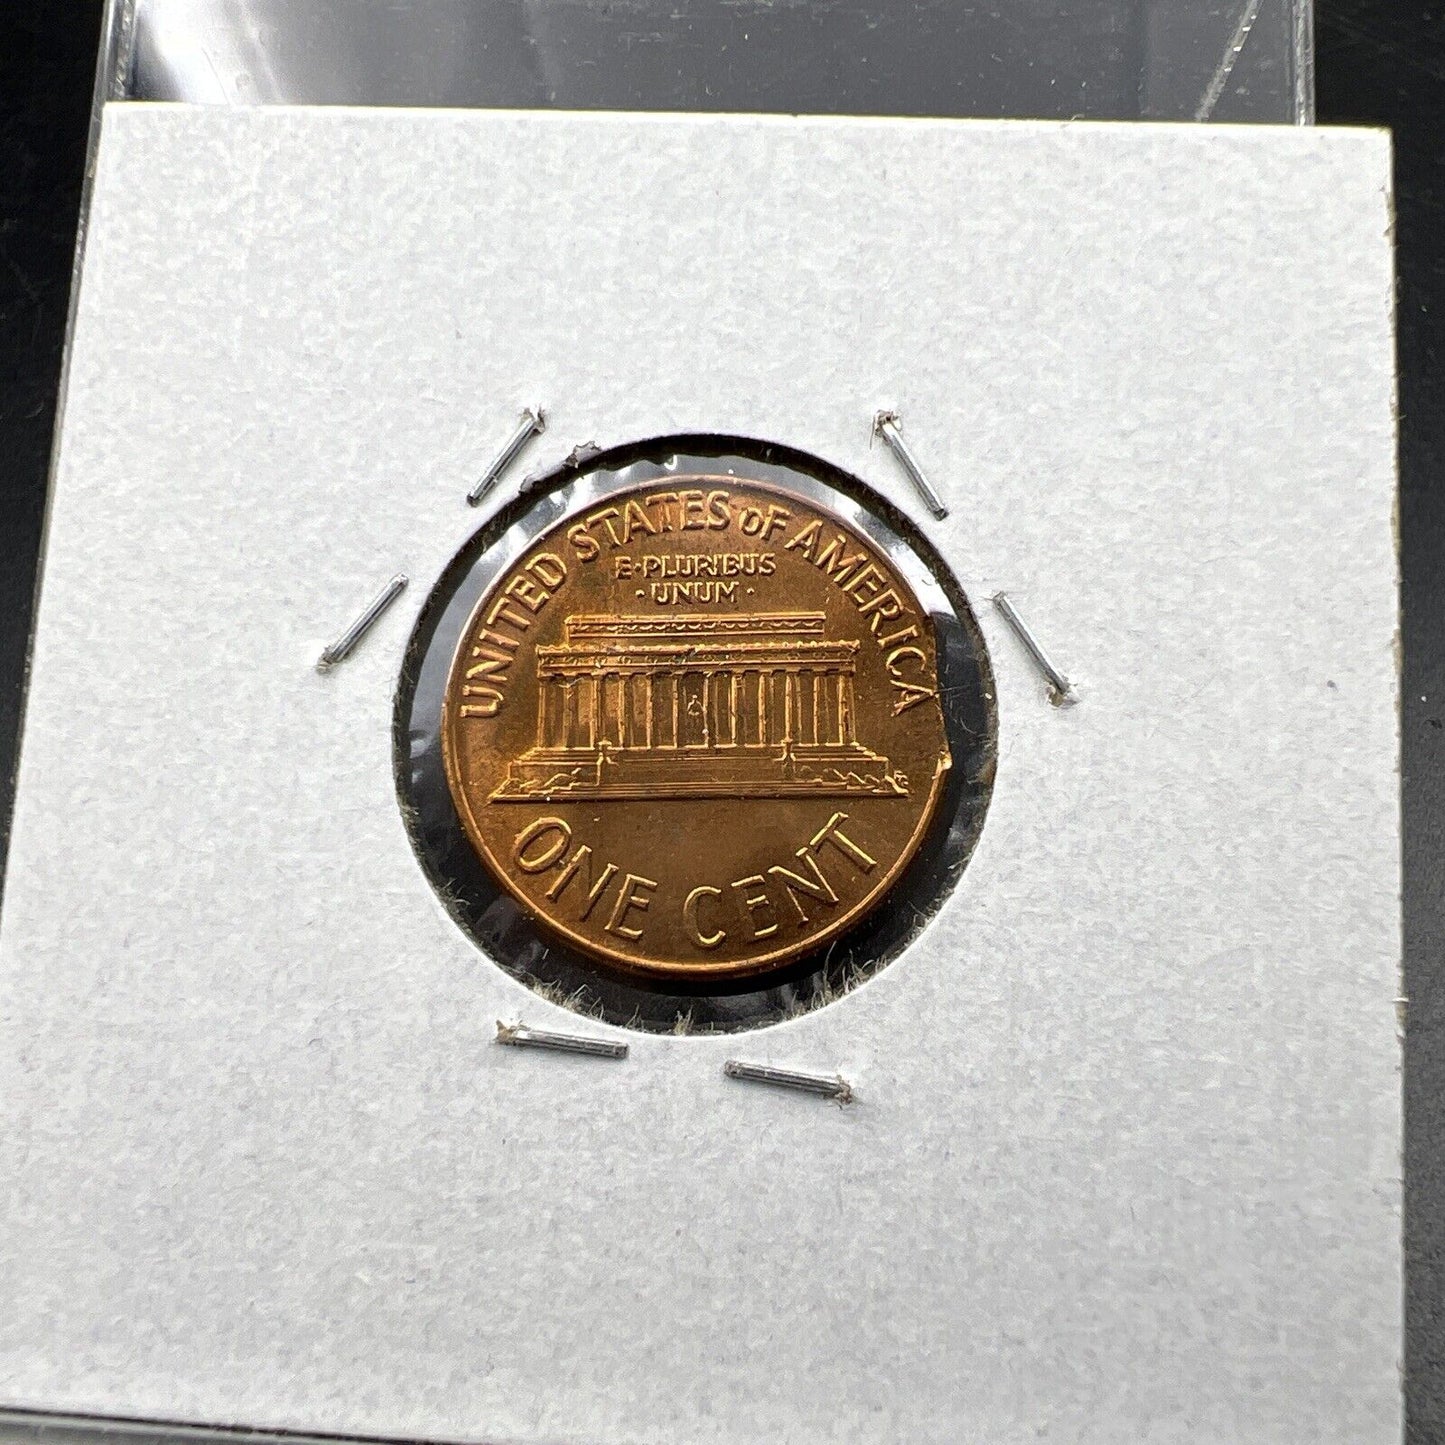 1960 P 1c Lincoln Memorial Cent Penny Choice BU UNC Clipped Planchet Error